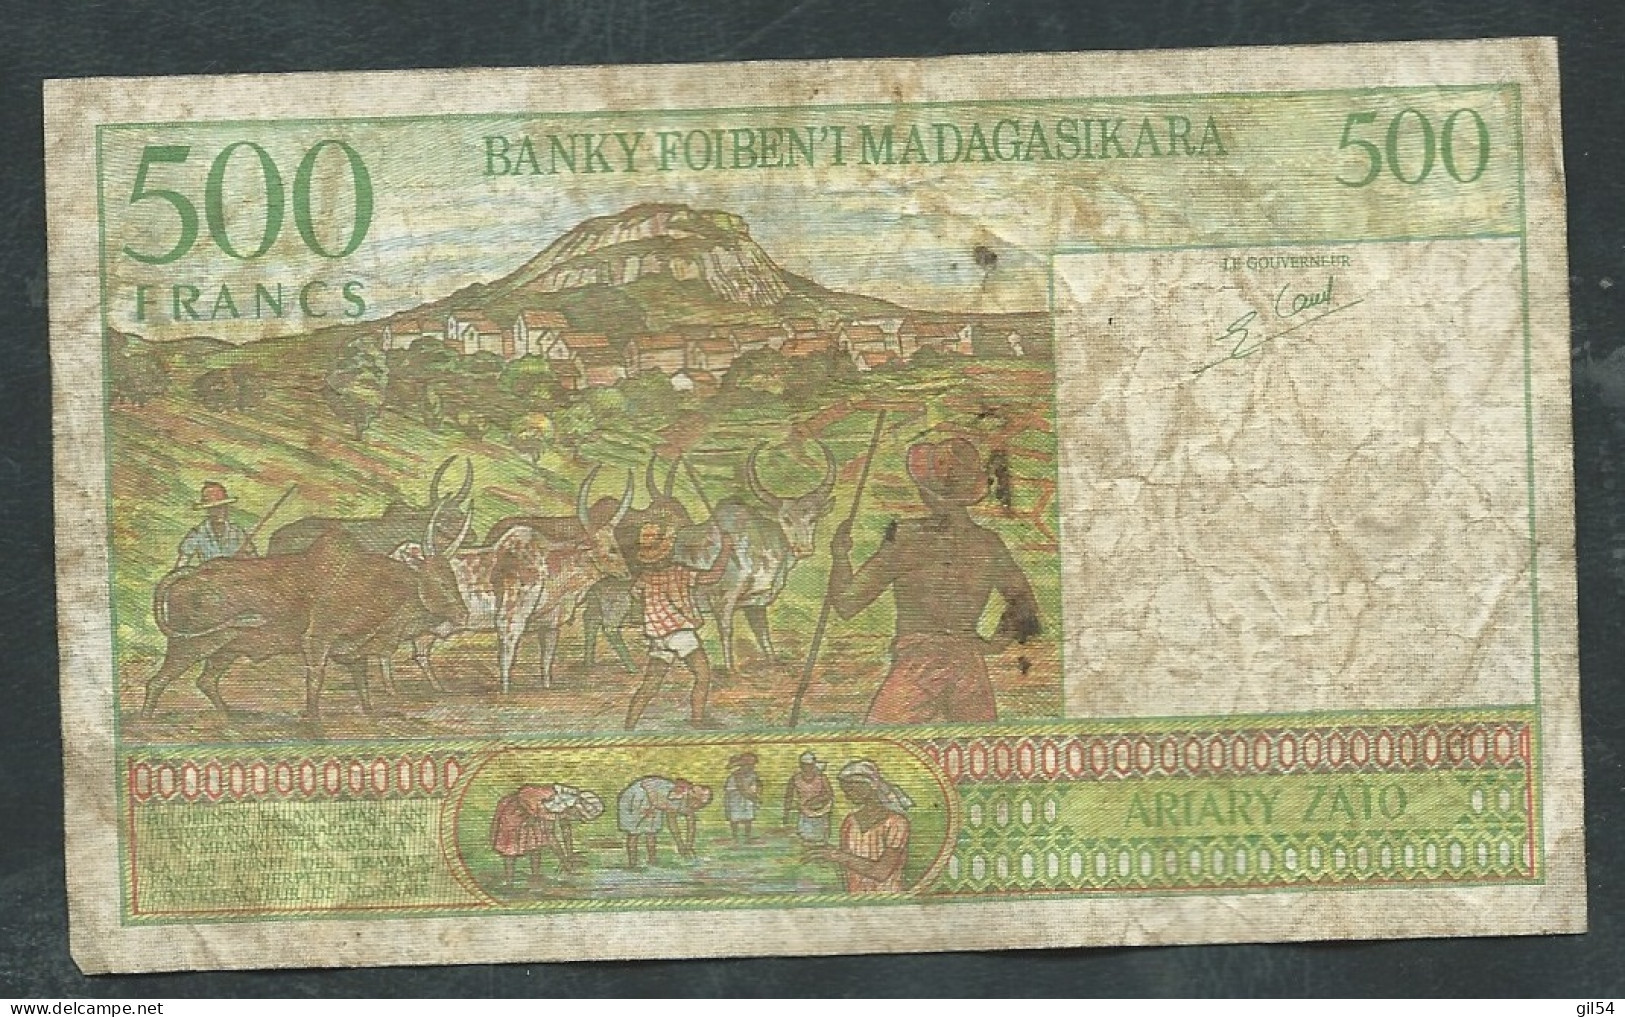 MADAGASCAR - Billet 500 Francs ARIARY ZATO  - B67807716  Laura 12908 - Madagaskar